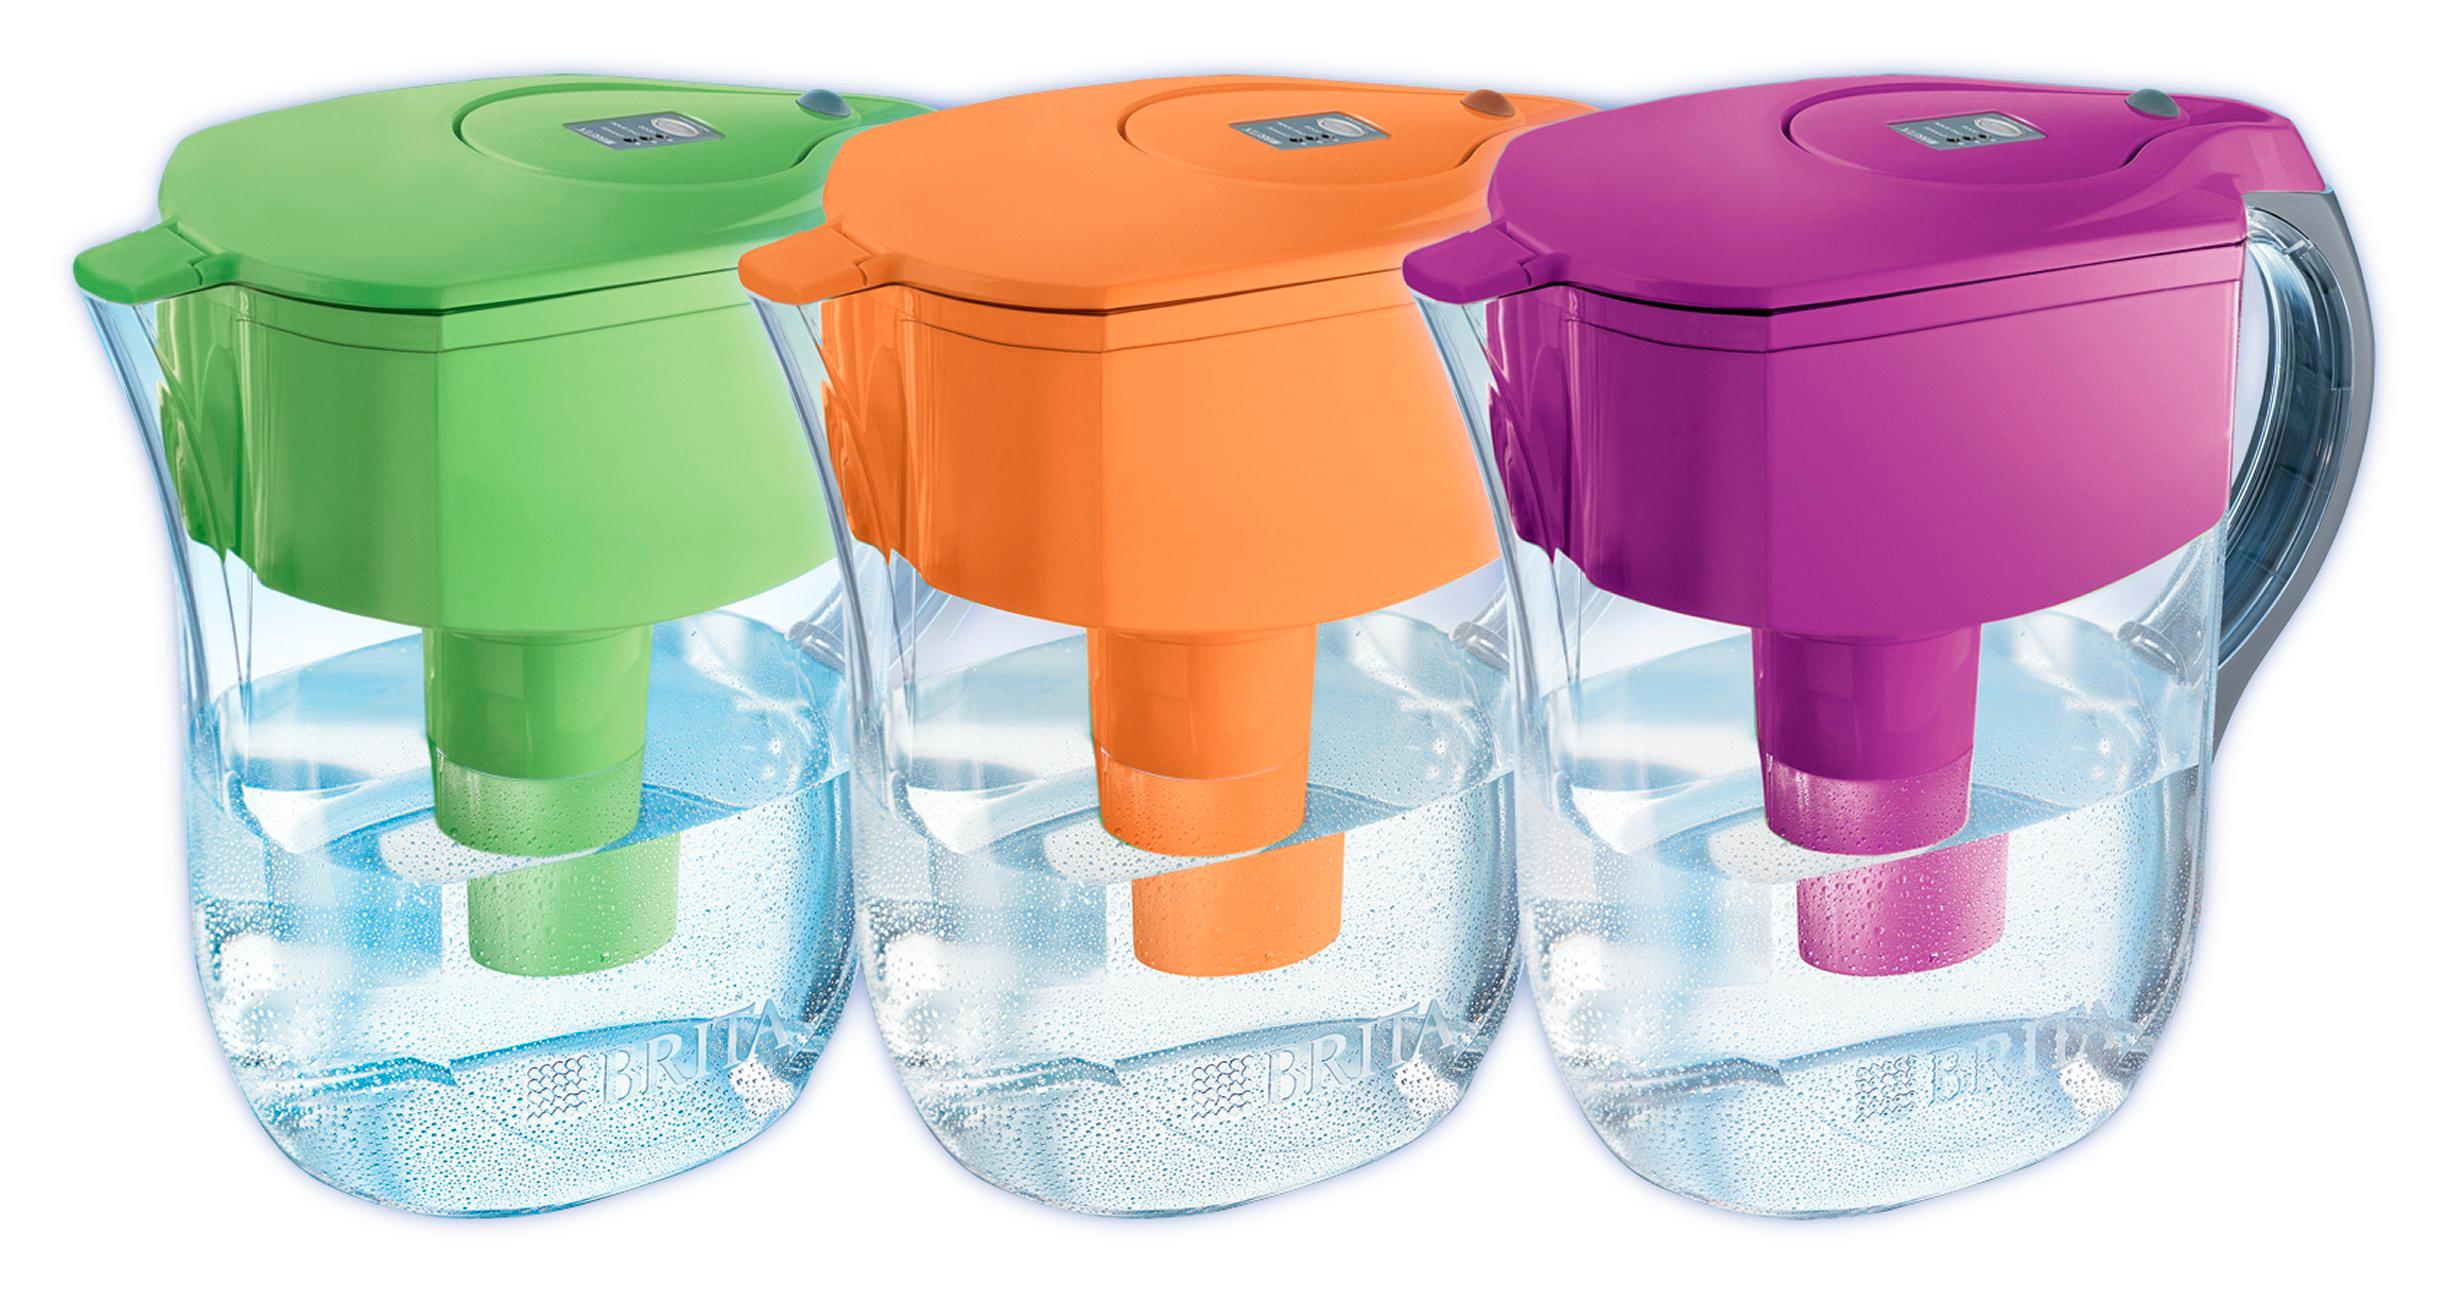 brita water filter jug instructions